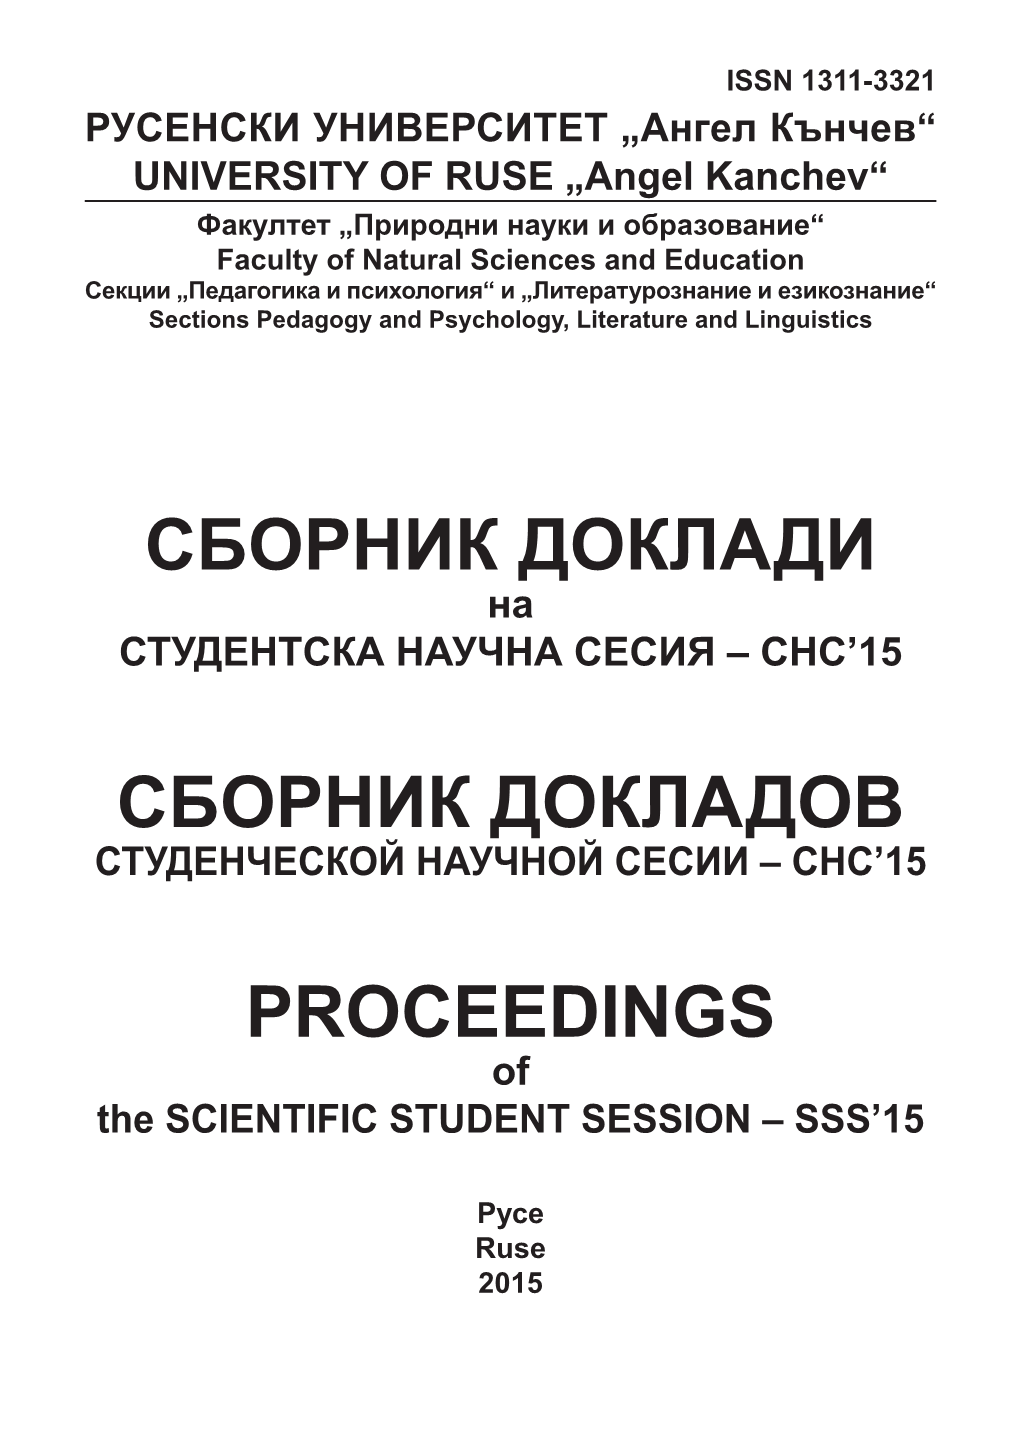 Педагогика И Психология“ И „Литературознание И Езикознание“ Sections Pedagogy and Psychology, Literature and Linguistics